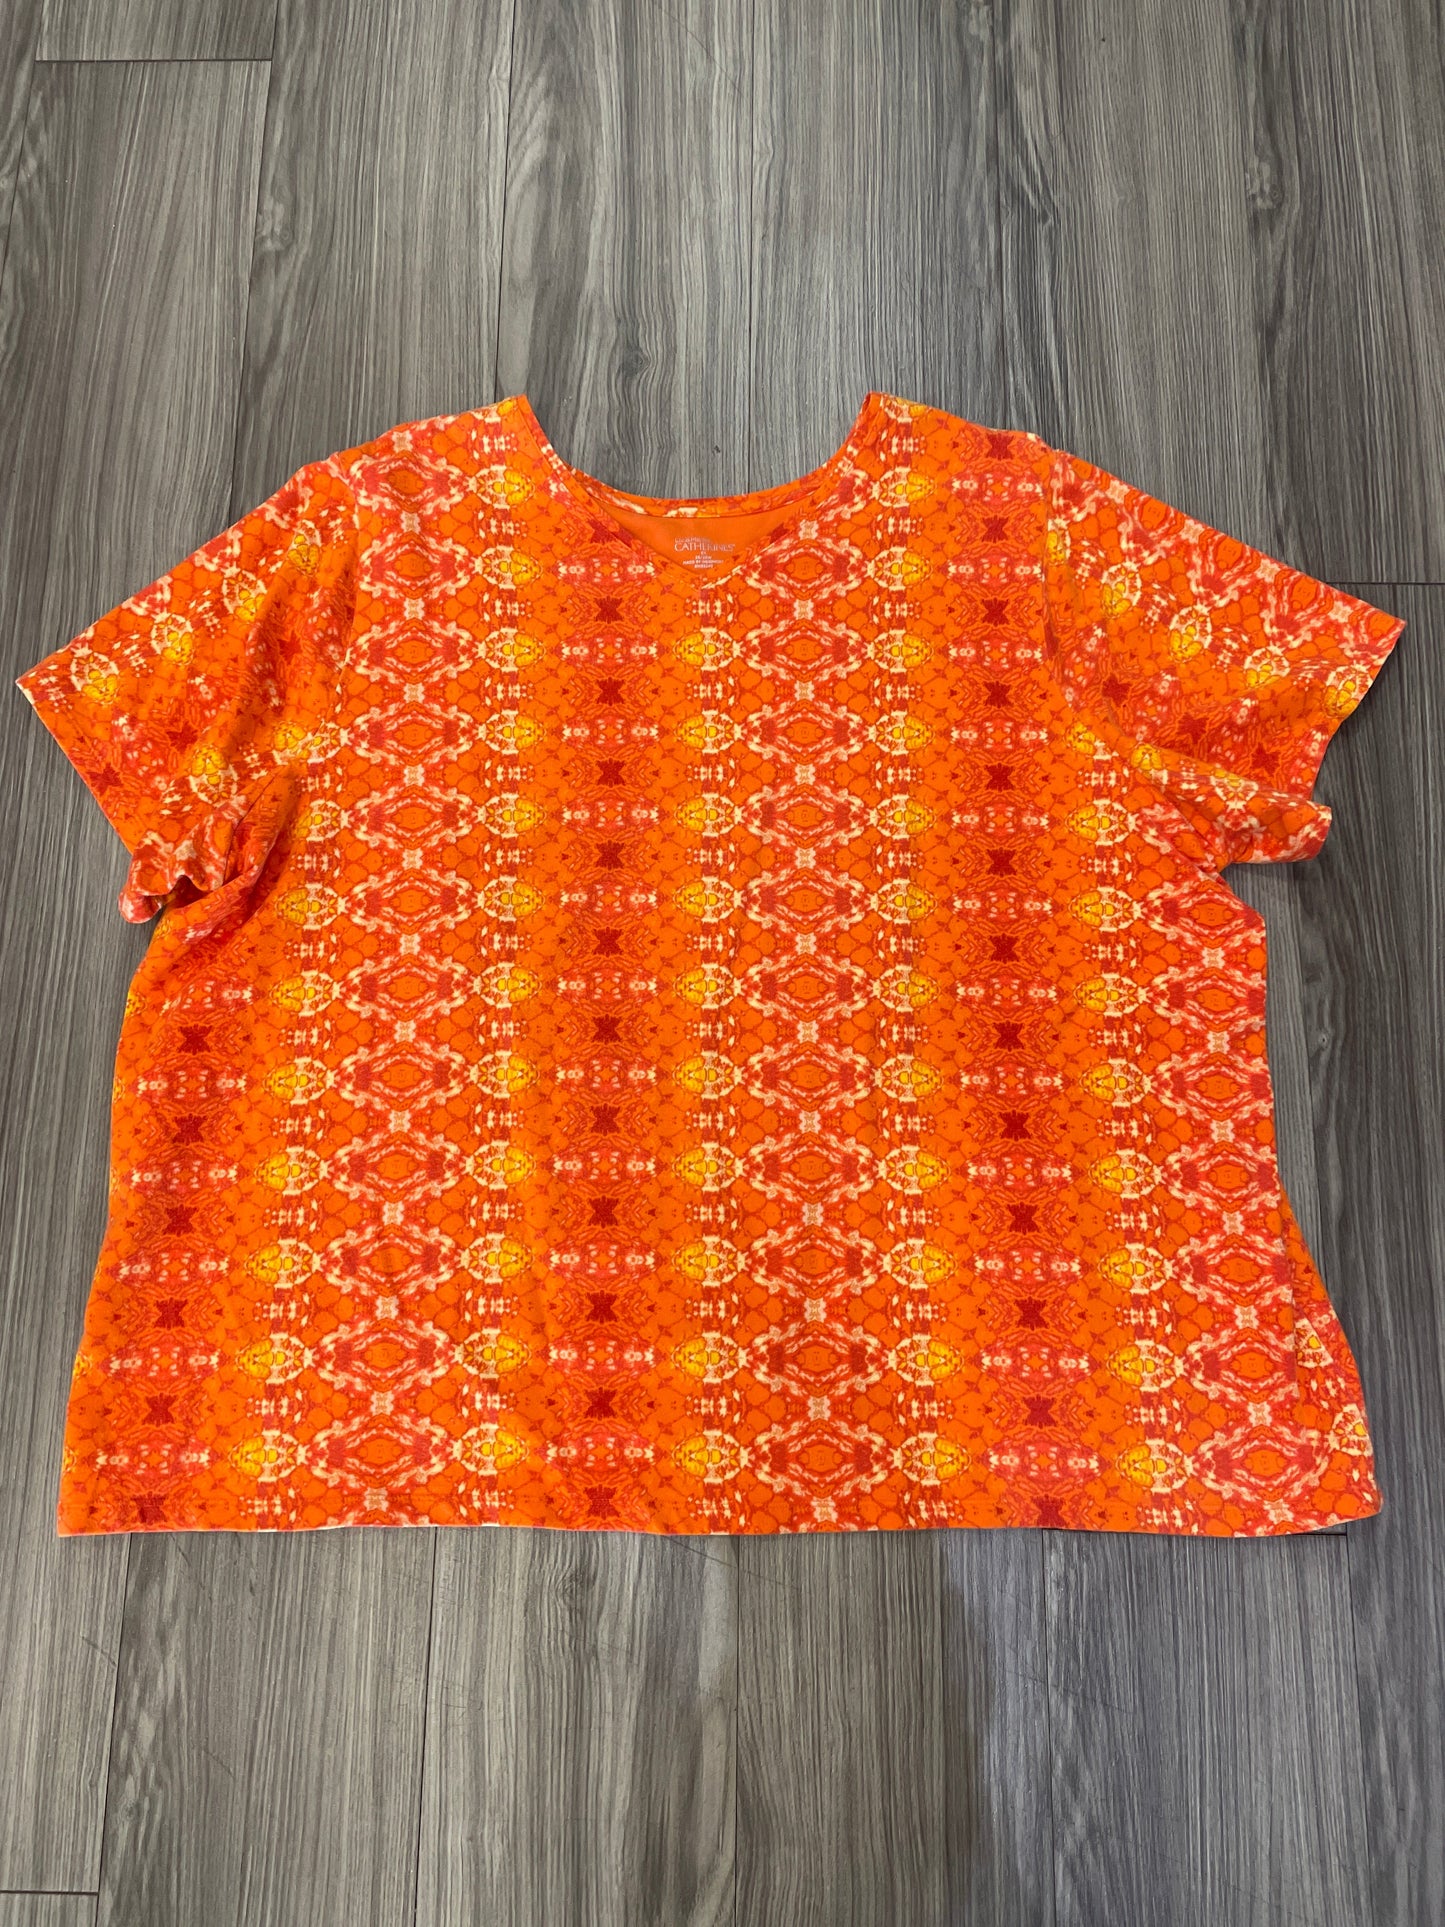 Orange Top Short Sleeve Catherines, Size 3x